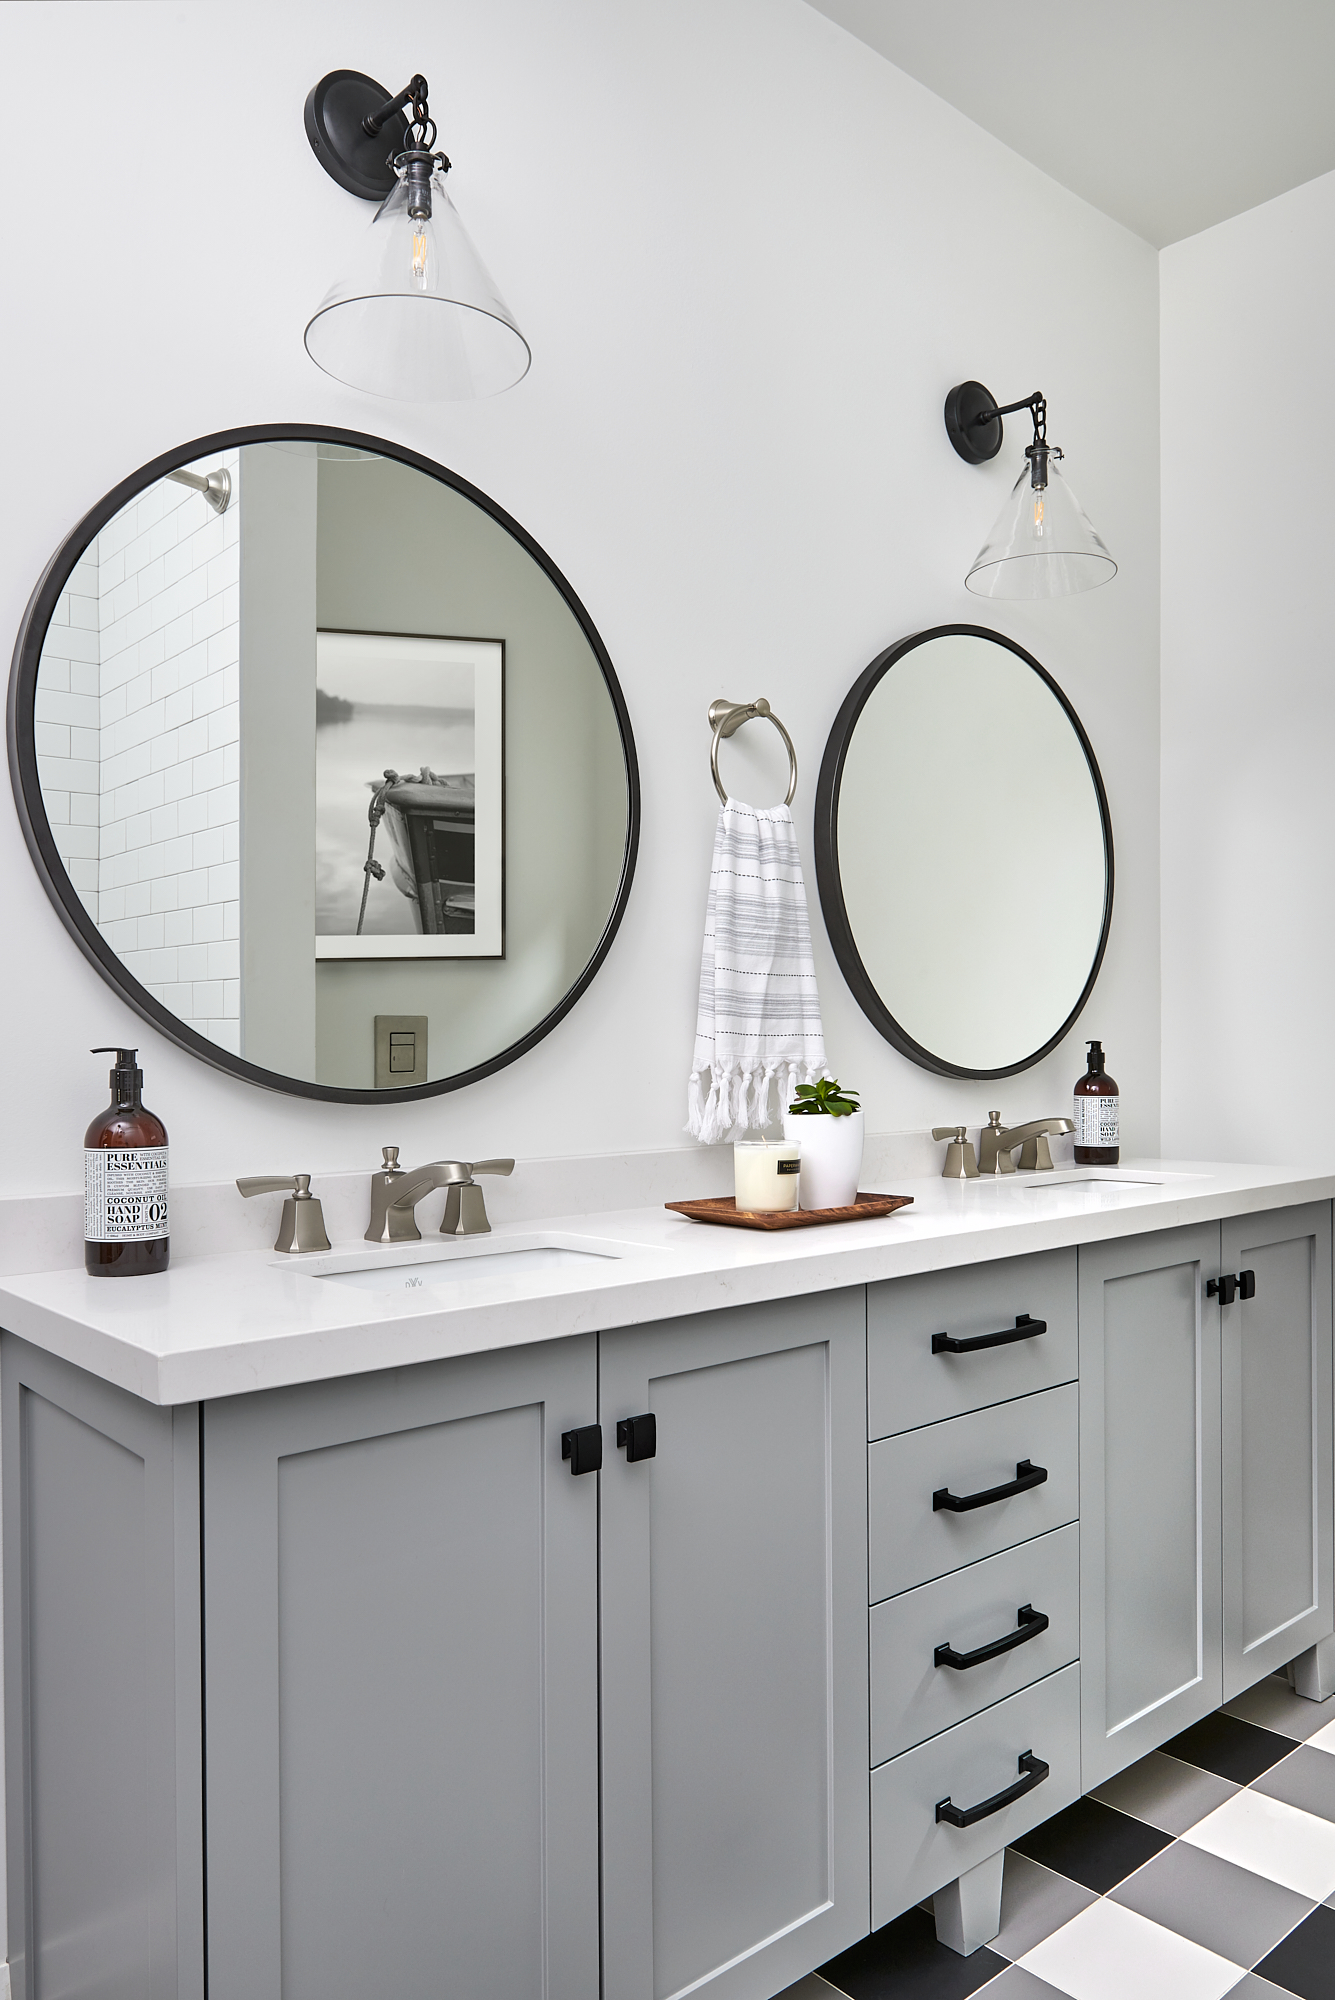 custom grey vanity with black hardware and round mirrors above